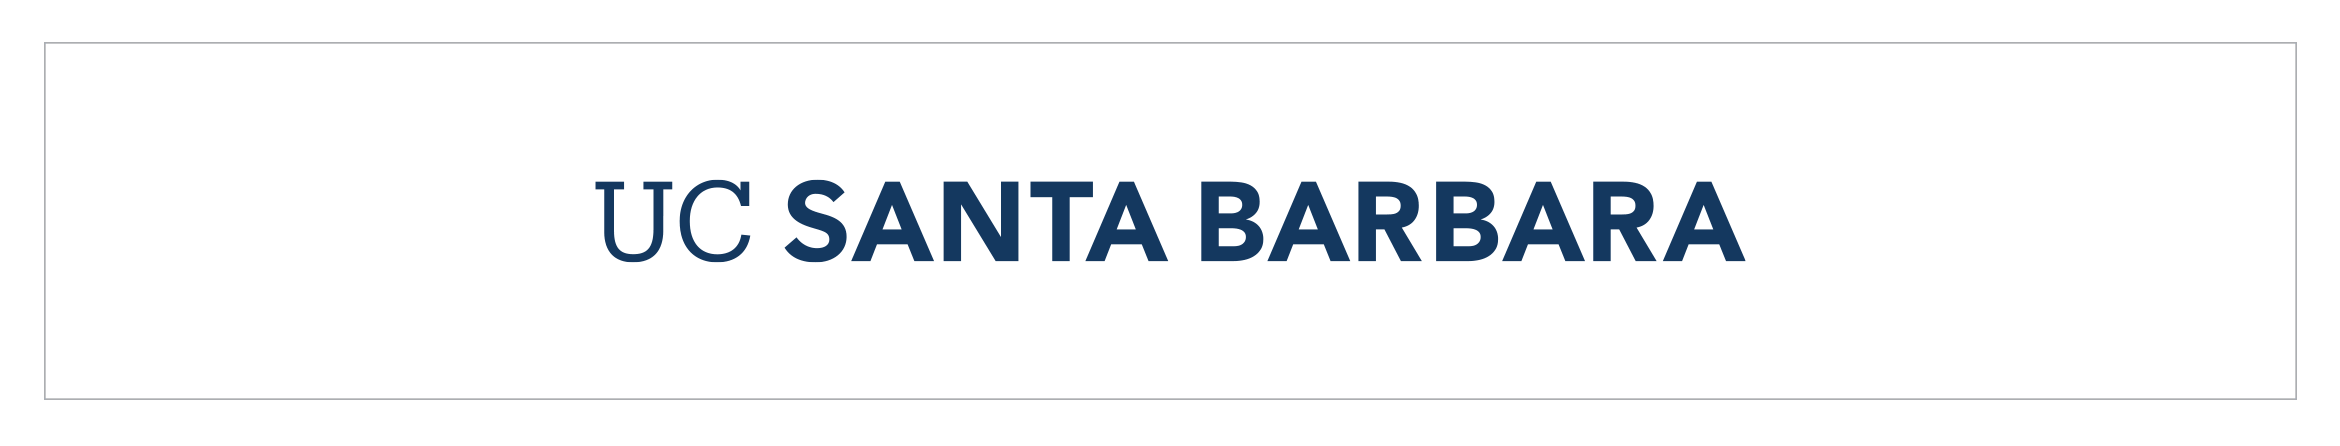 UC Santa Barbara primary wordmark